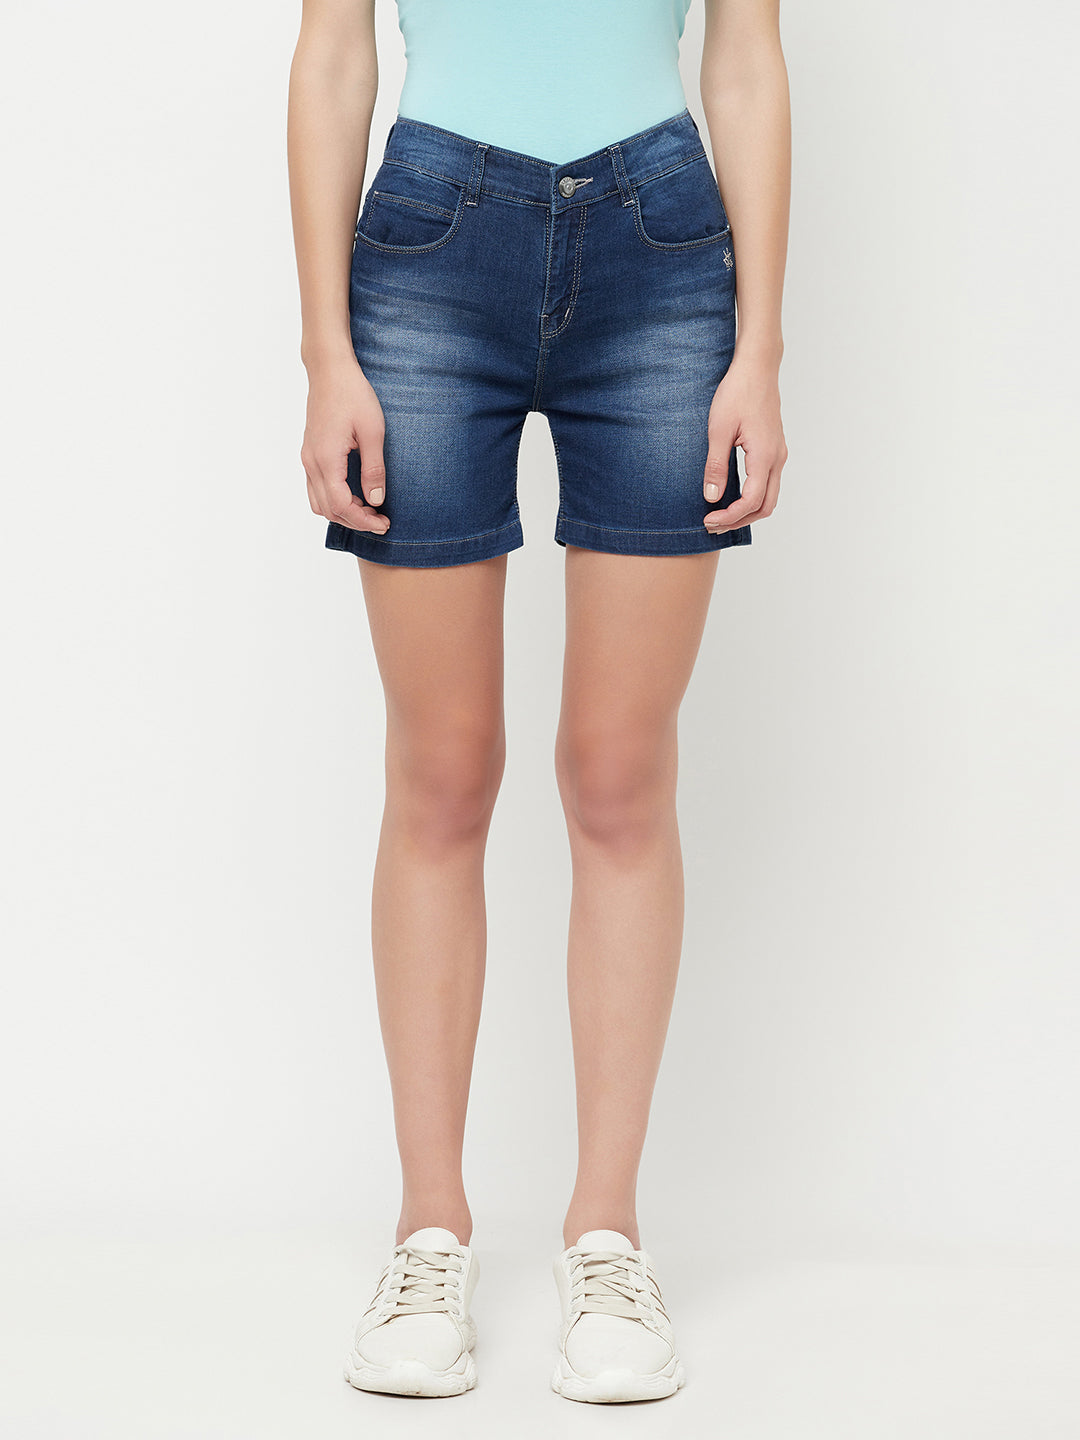 Blue Light Fade shorts - Women Shorts